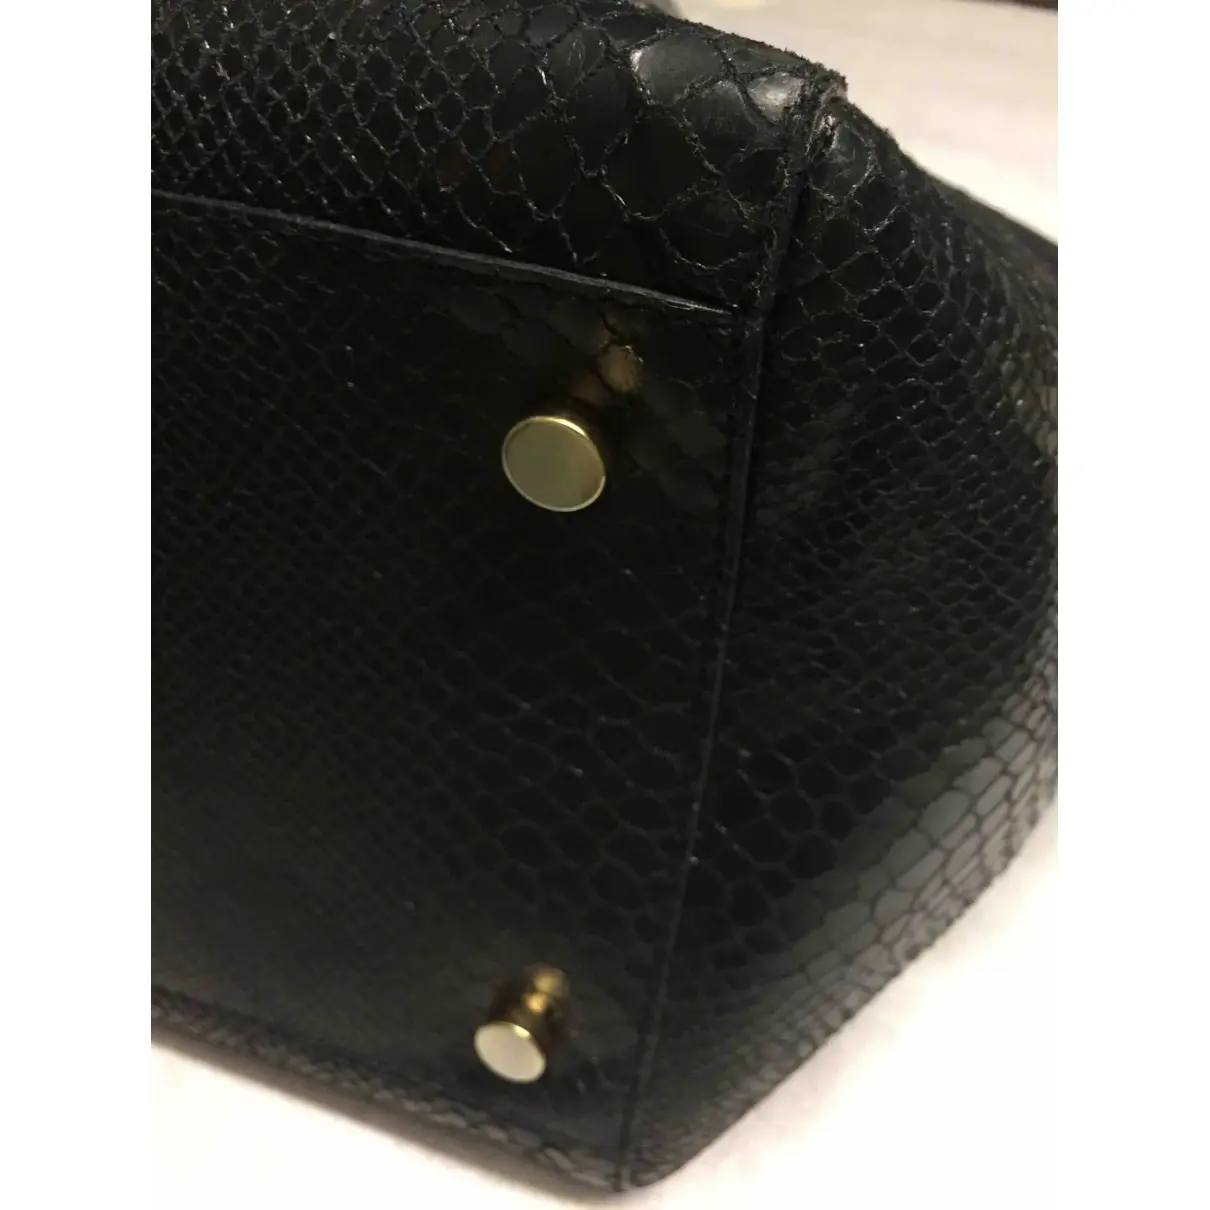 Buy Stella McCartney Cavendish cloth handbag online